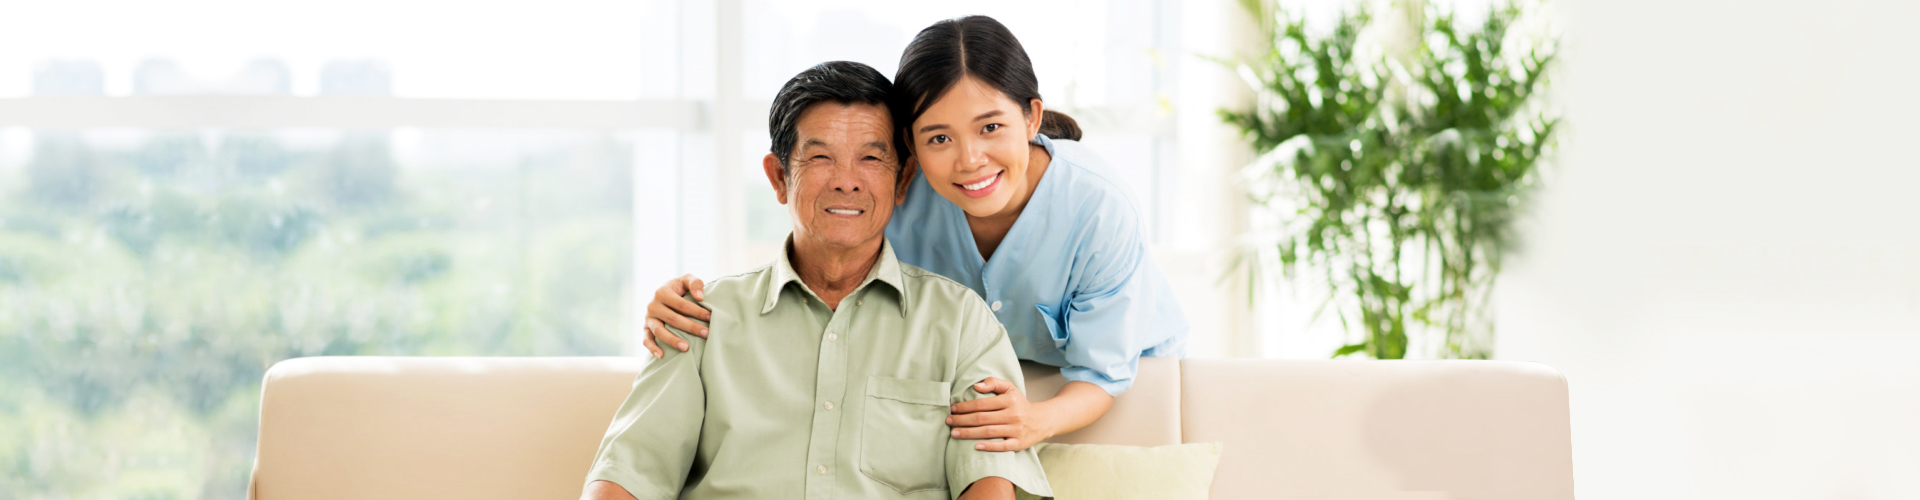 caregiver and her elderly man patient